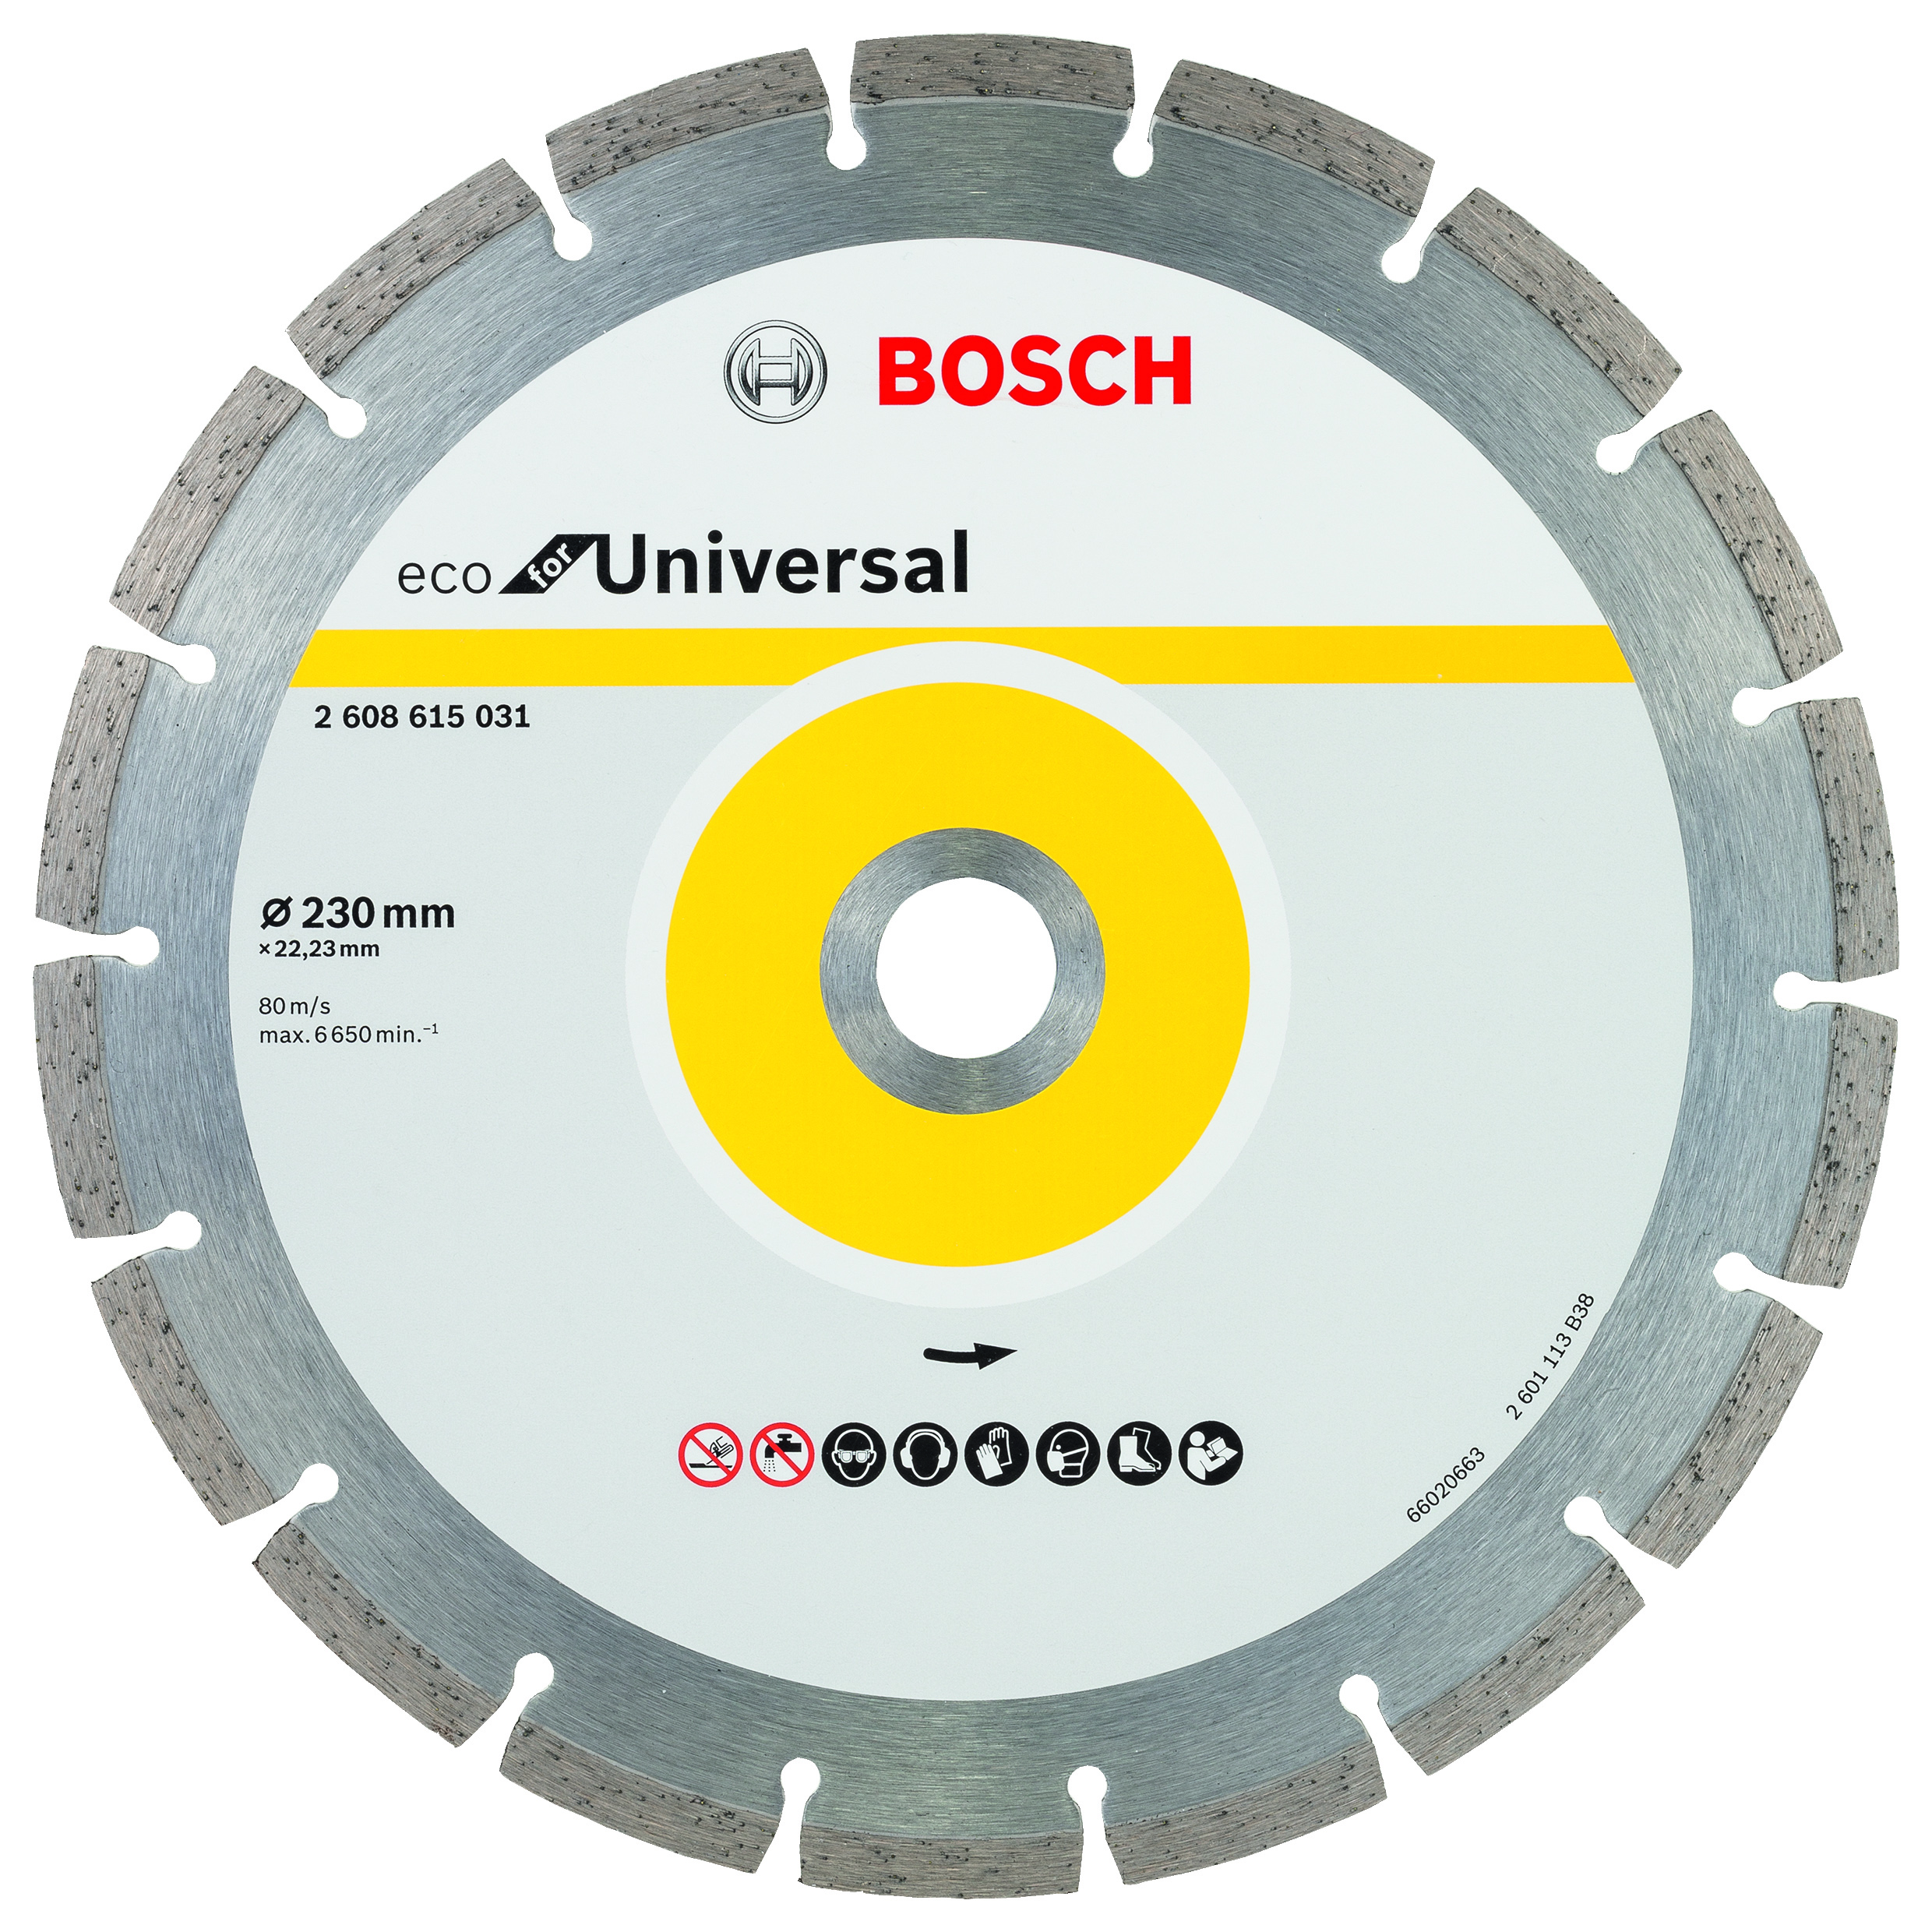 Bosch Diamond Cutting Disc ECO Universal